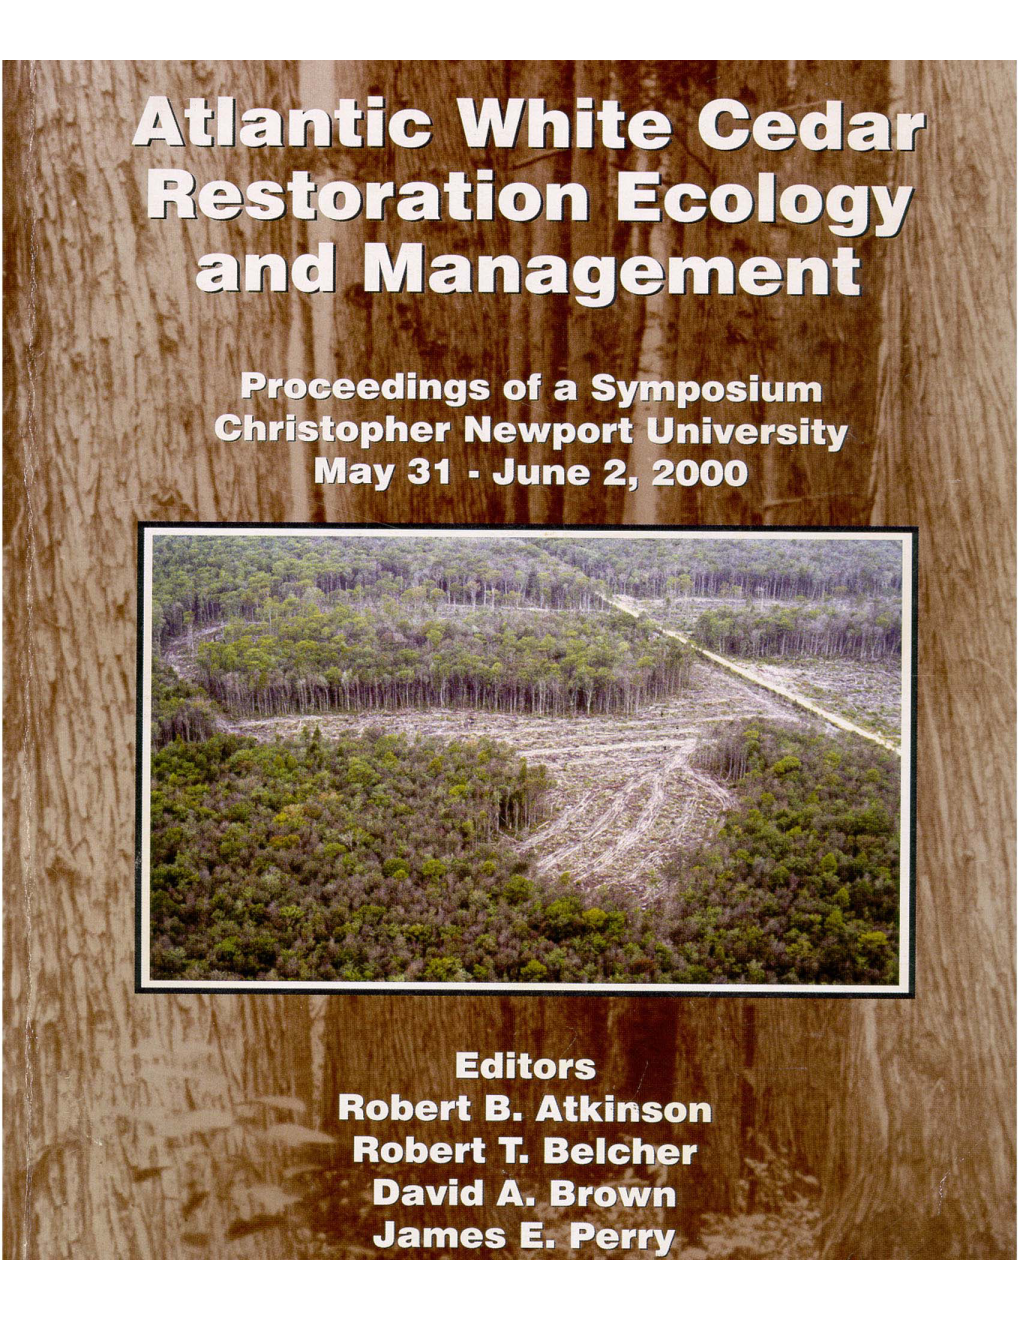 Proceedings of a Symposium Held May 31 - June 2, 2000 at Christopher Newport University, Newport News, Virginia 23606